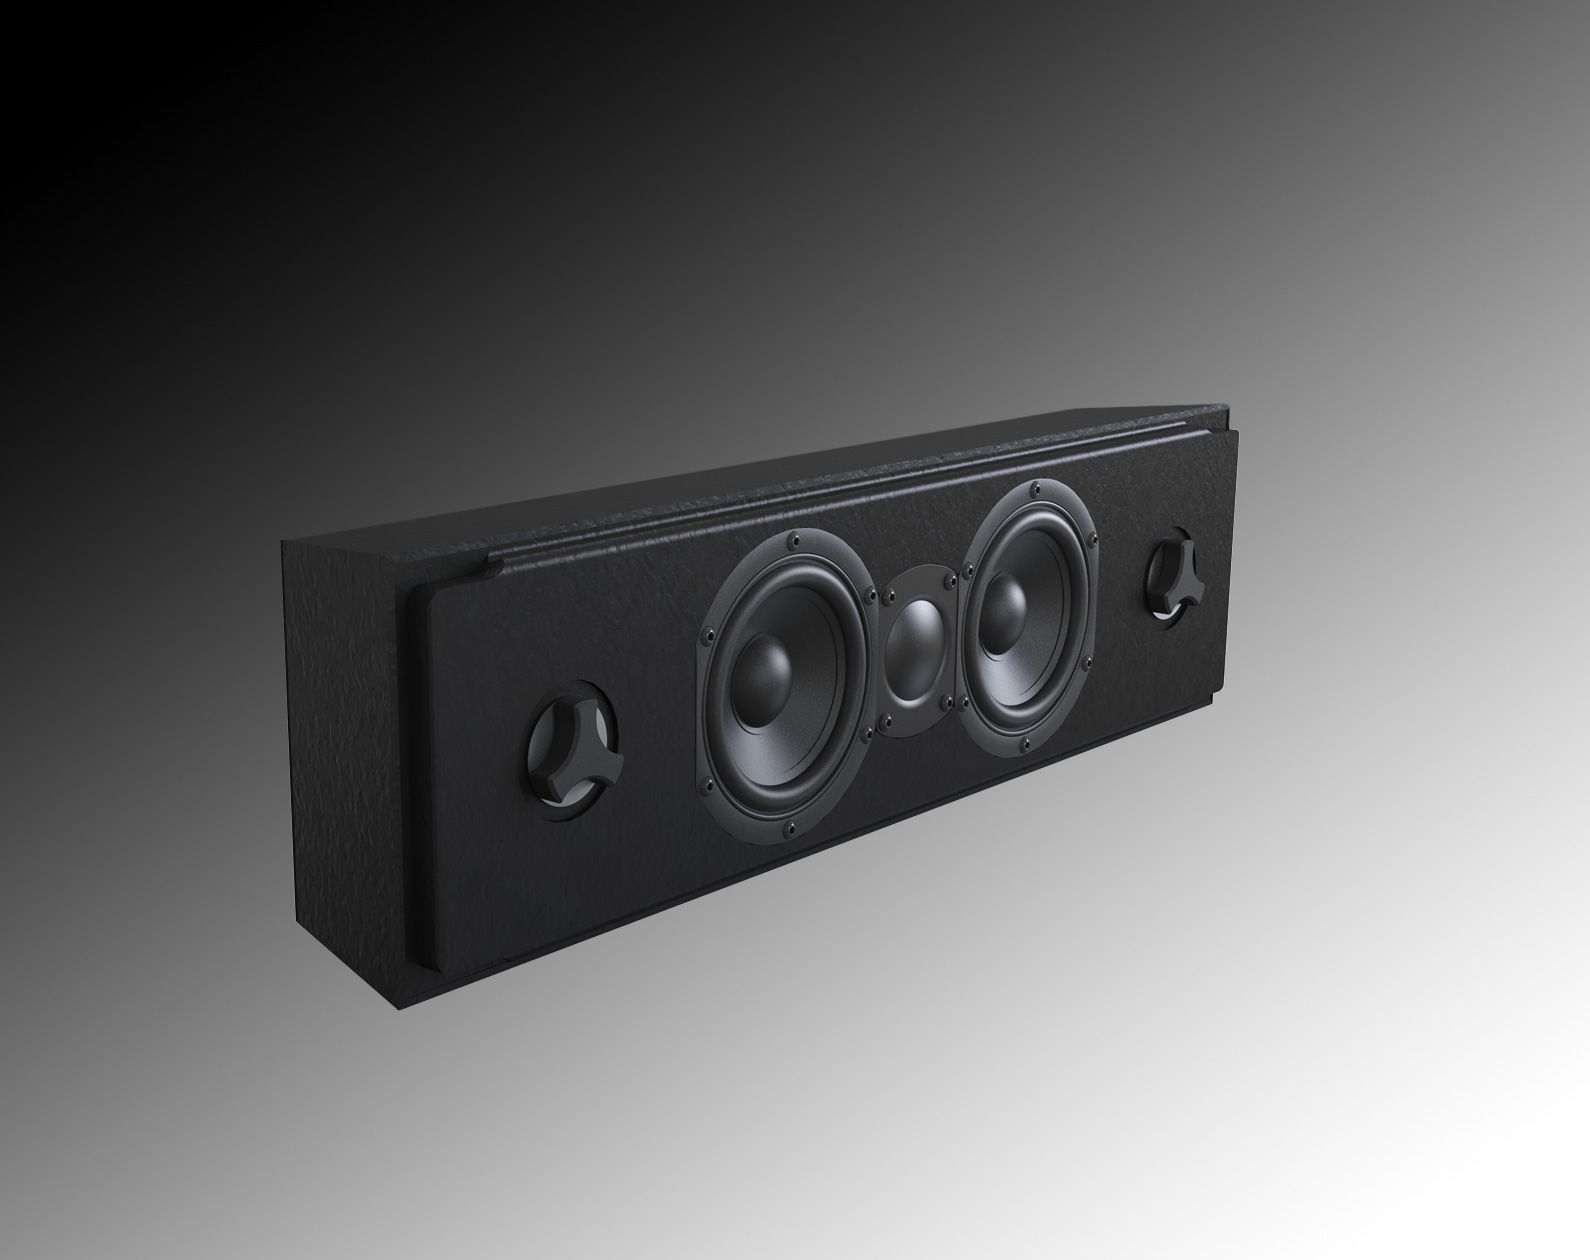 ONWALL MINI LCR 1.0 SE soundbar triad speakers